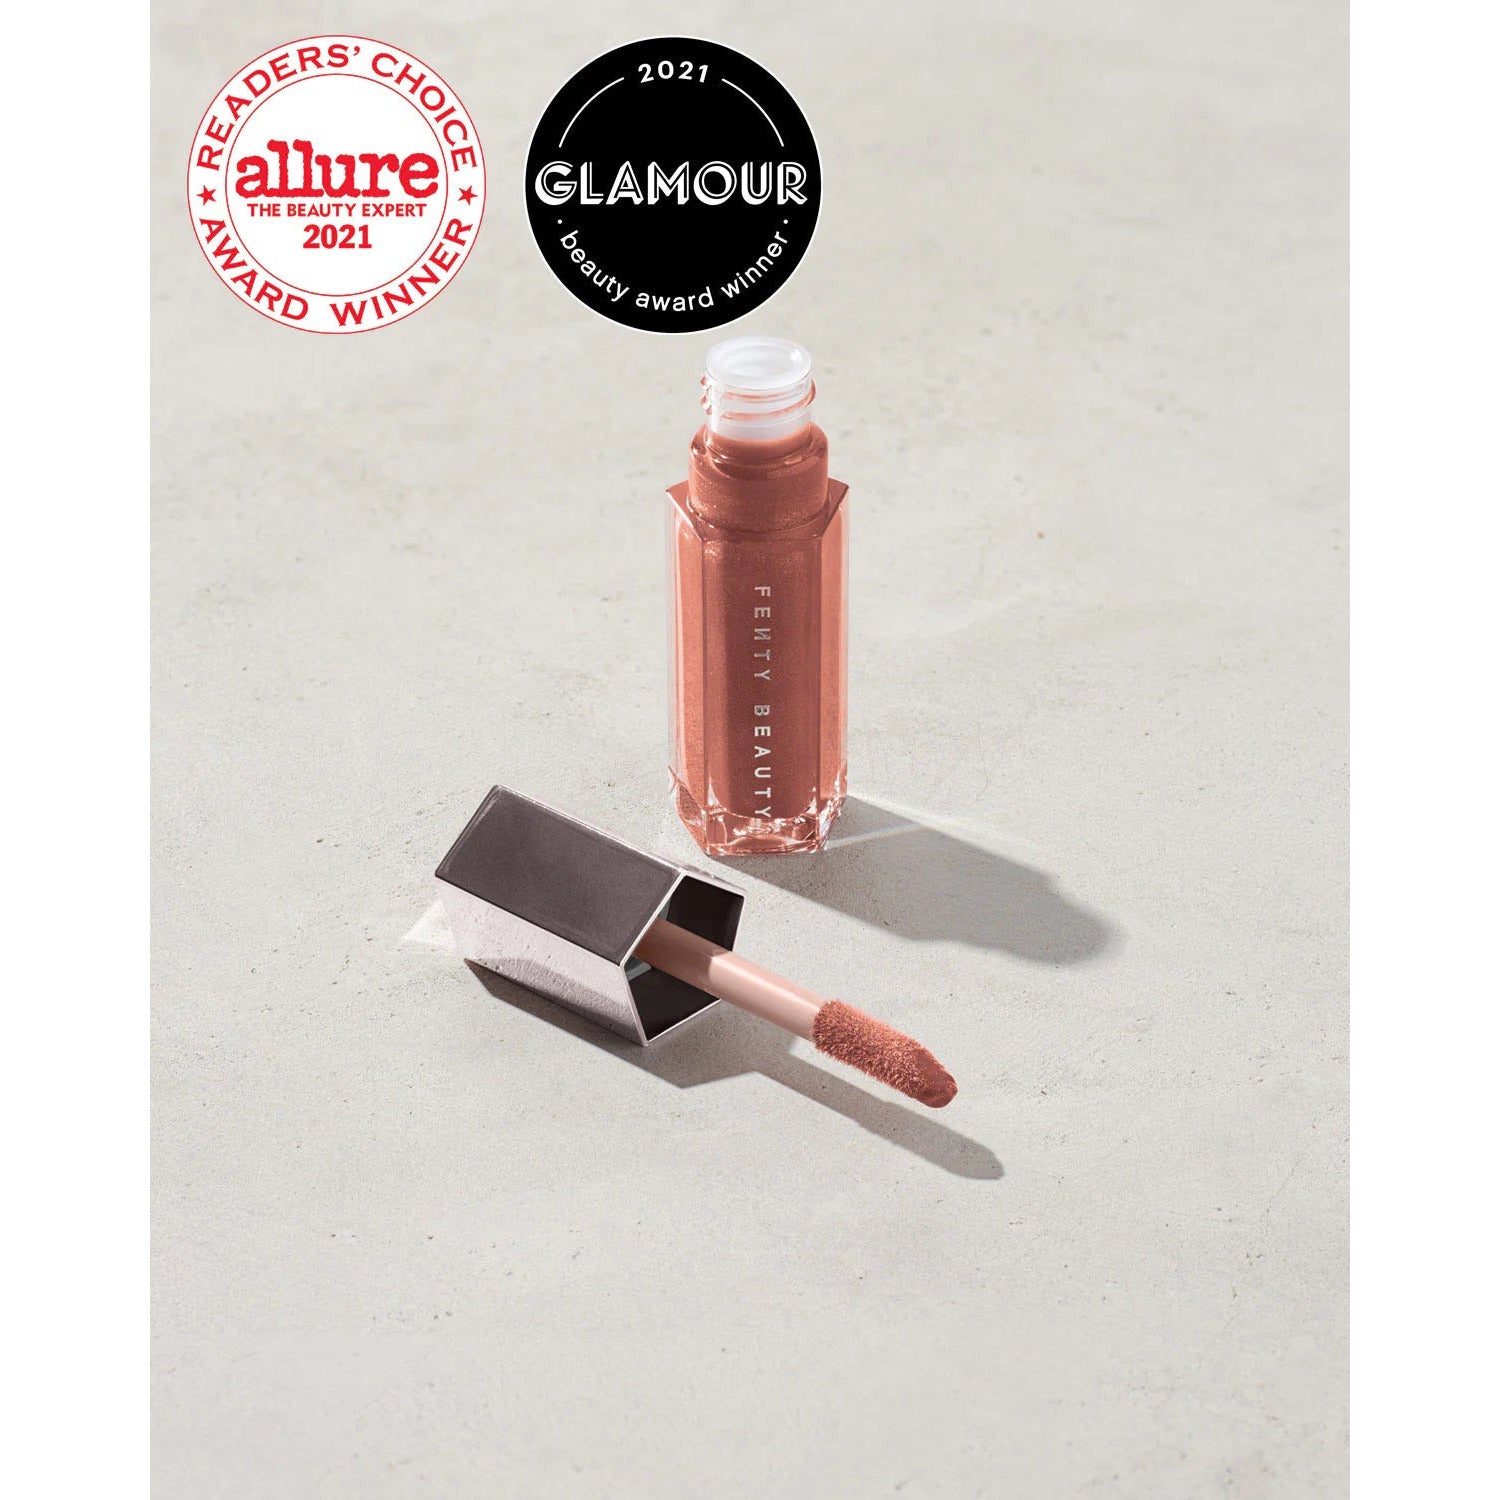 Fenty Beauty Gloss Bomb Universal Lip Luminizer in Fenty Glow Full Size